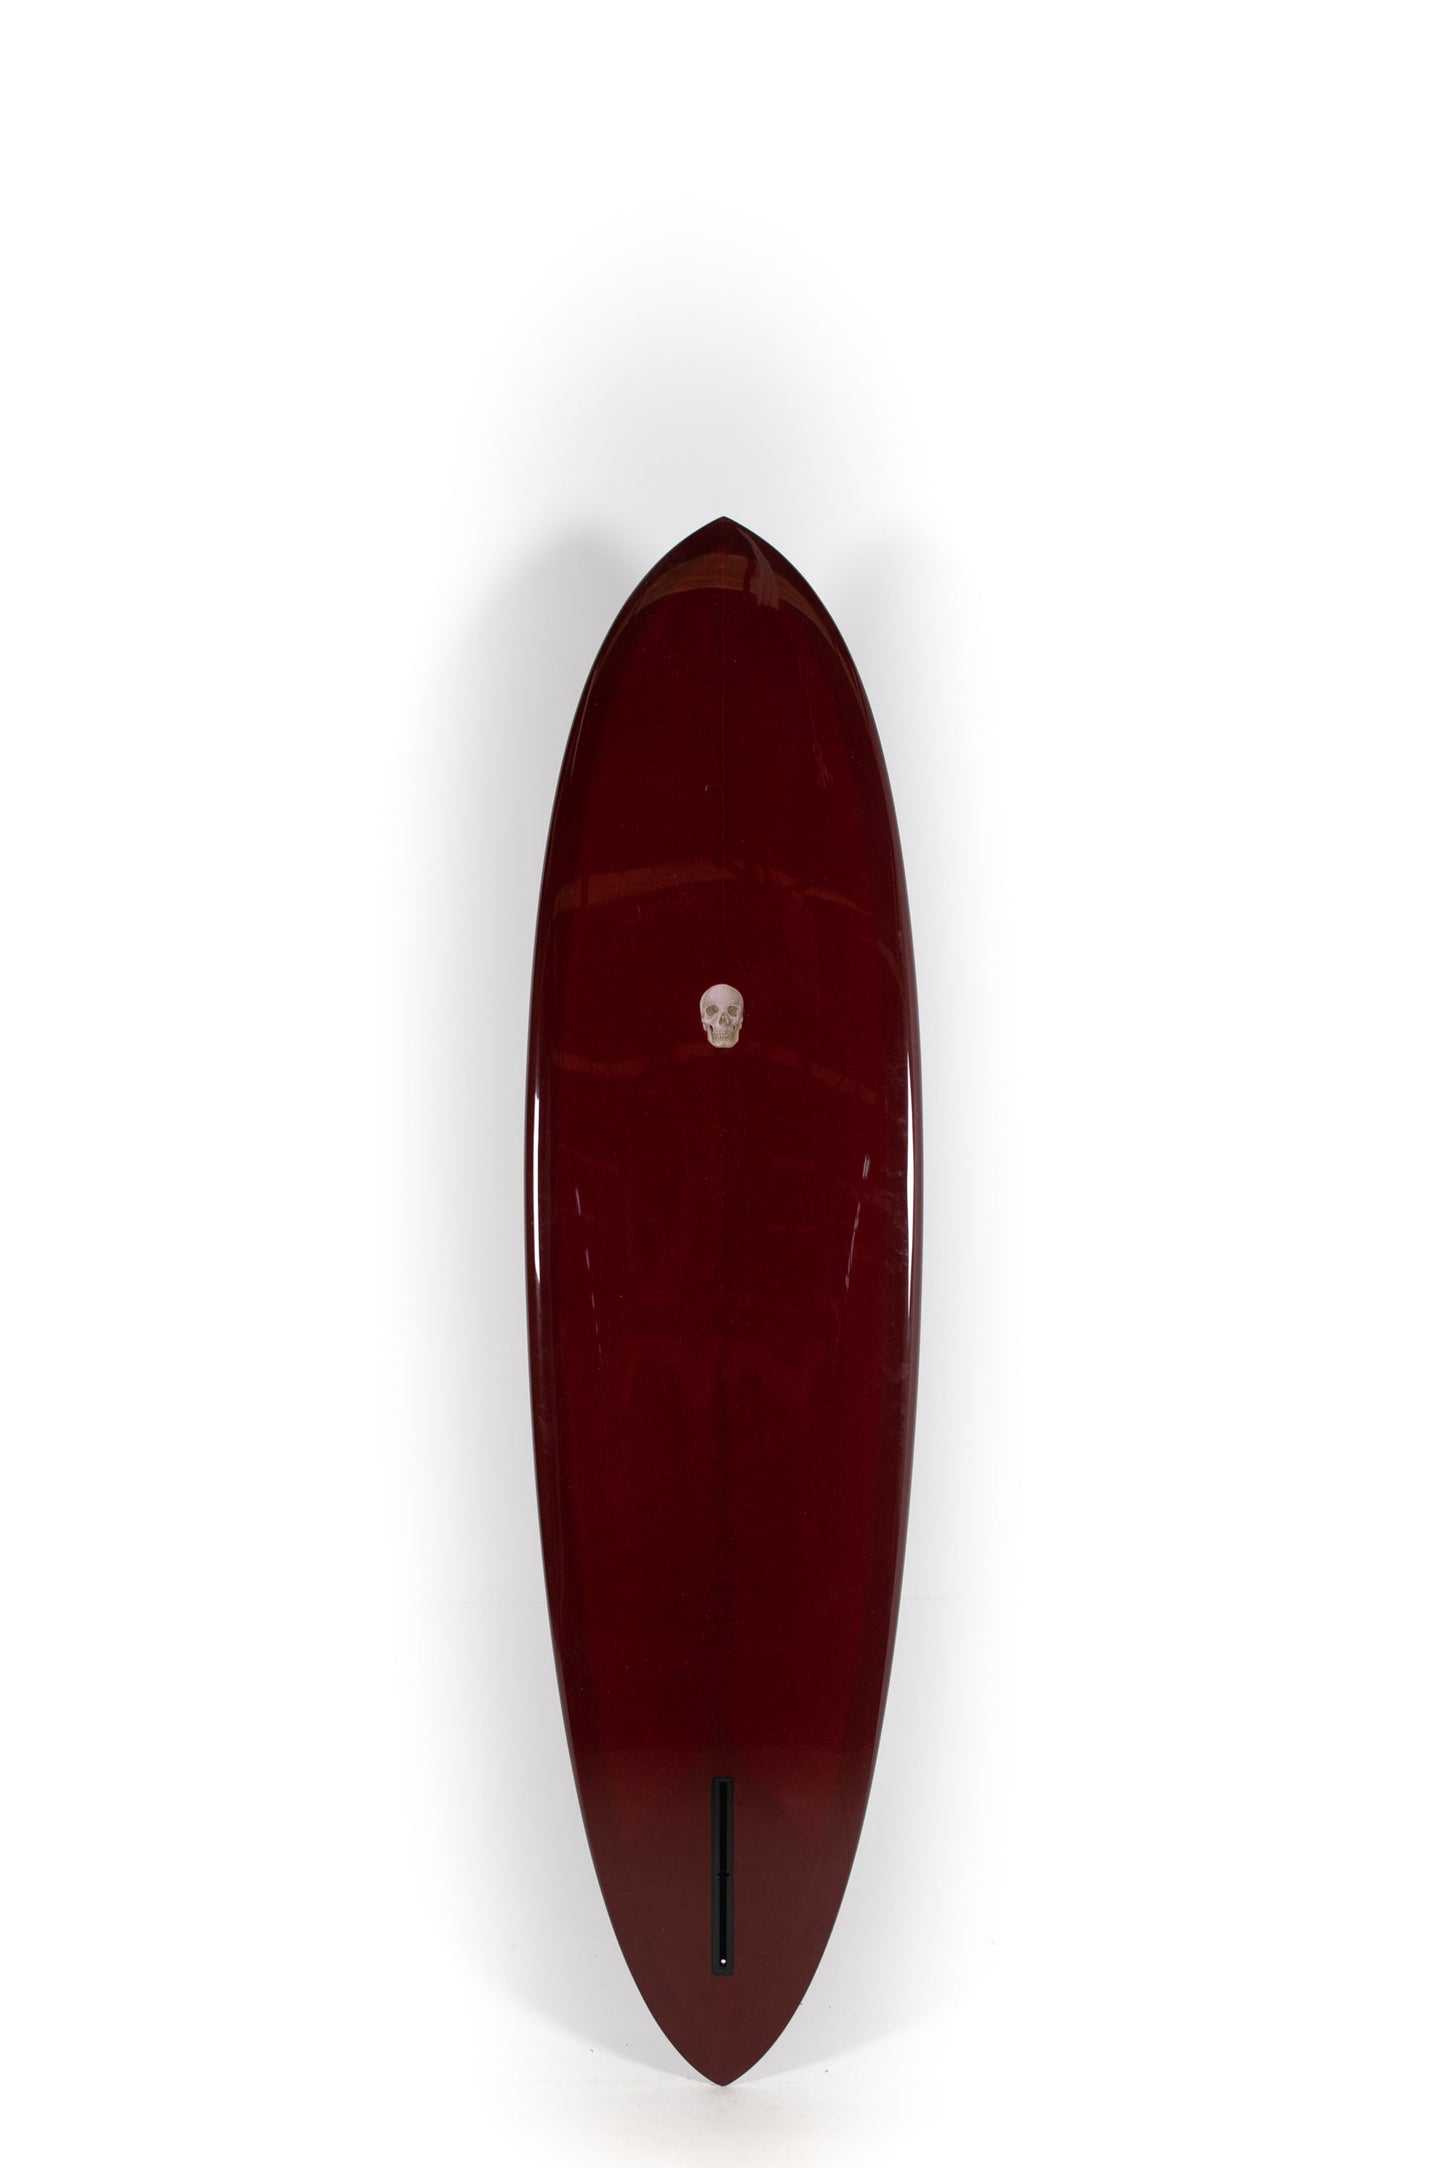 Pukas Surf Shop - Christenson Surfboards - C-BUCKET - 7'0" x 21 x 2 3/4 - CX05018